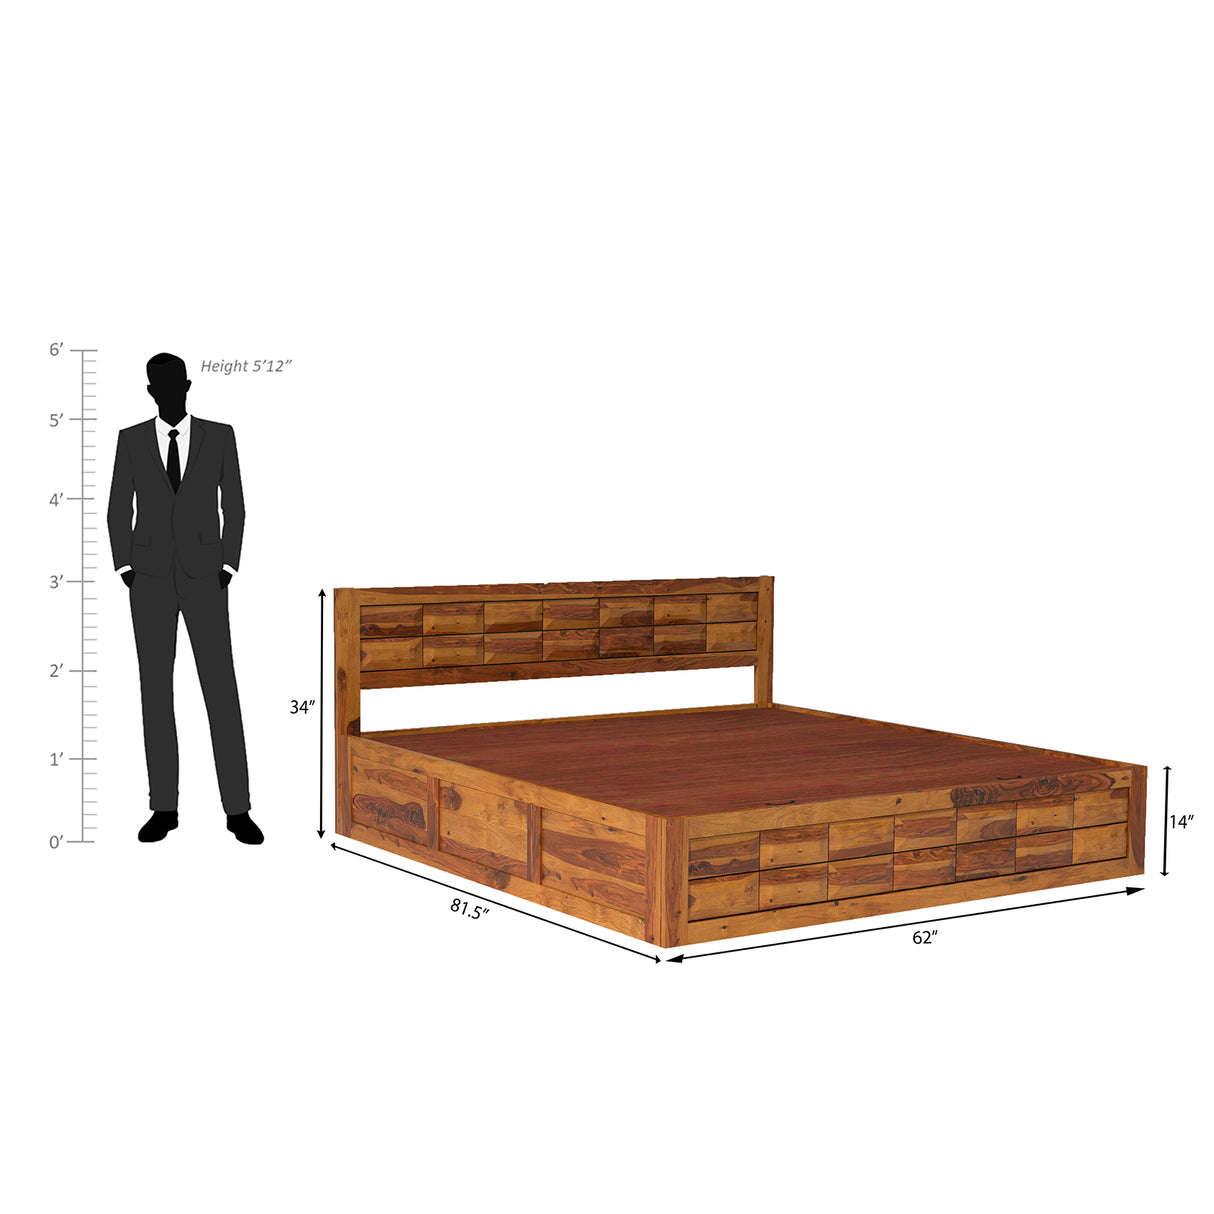 Arcadia Sheesham Wood Storage Hydraulic Bed In Light Honey